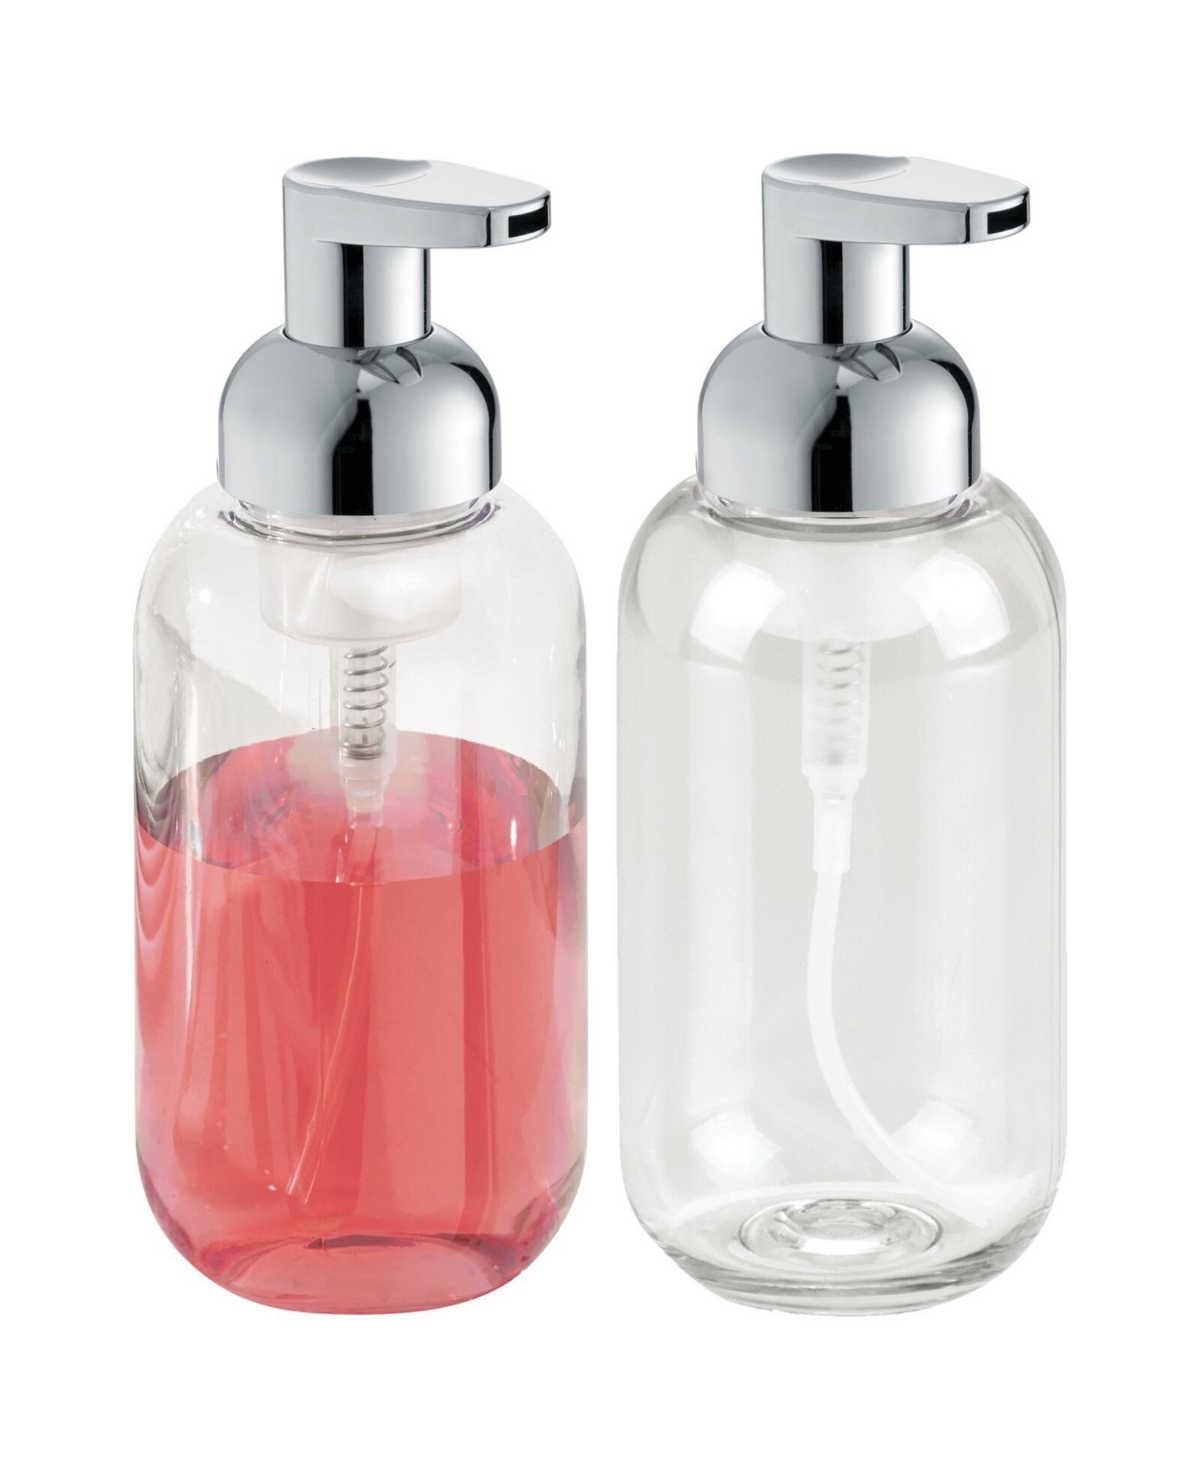 Refillable Foaming Soap Dispenser Pump Bottle, 2 Pack - Clear/chrome